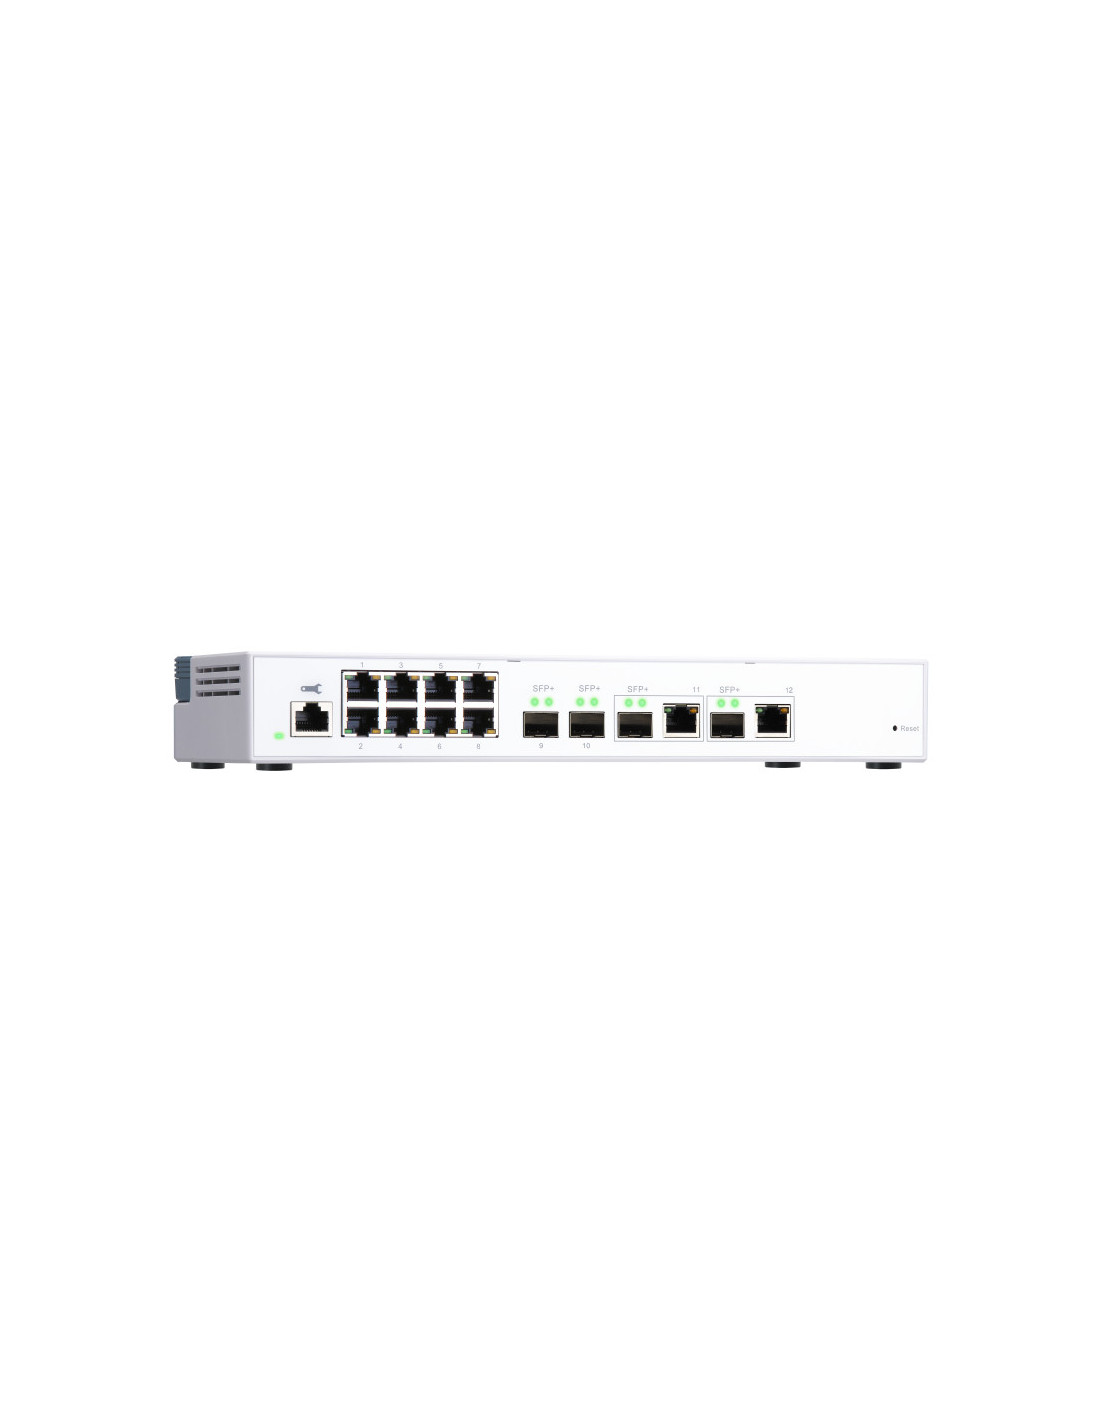 Switch  es  QSW-M408-2C Switch 10GbE - 12 puertos (8 RJ45, 2 SFP+, 2 combo SFP+ RJ45), agregación de puertos 802.3ad